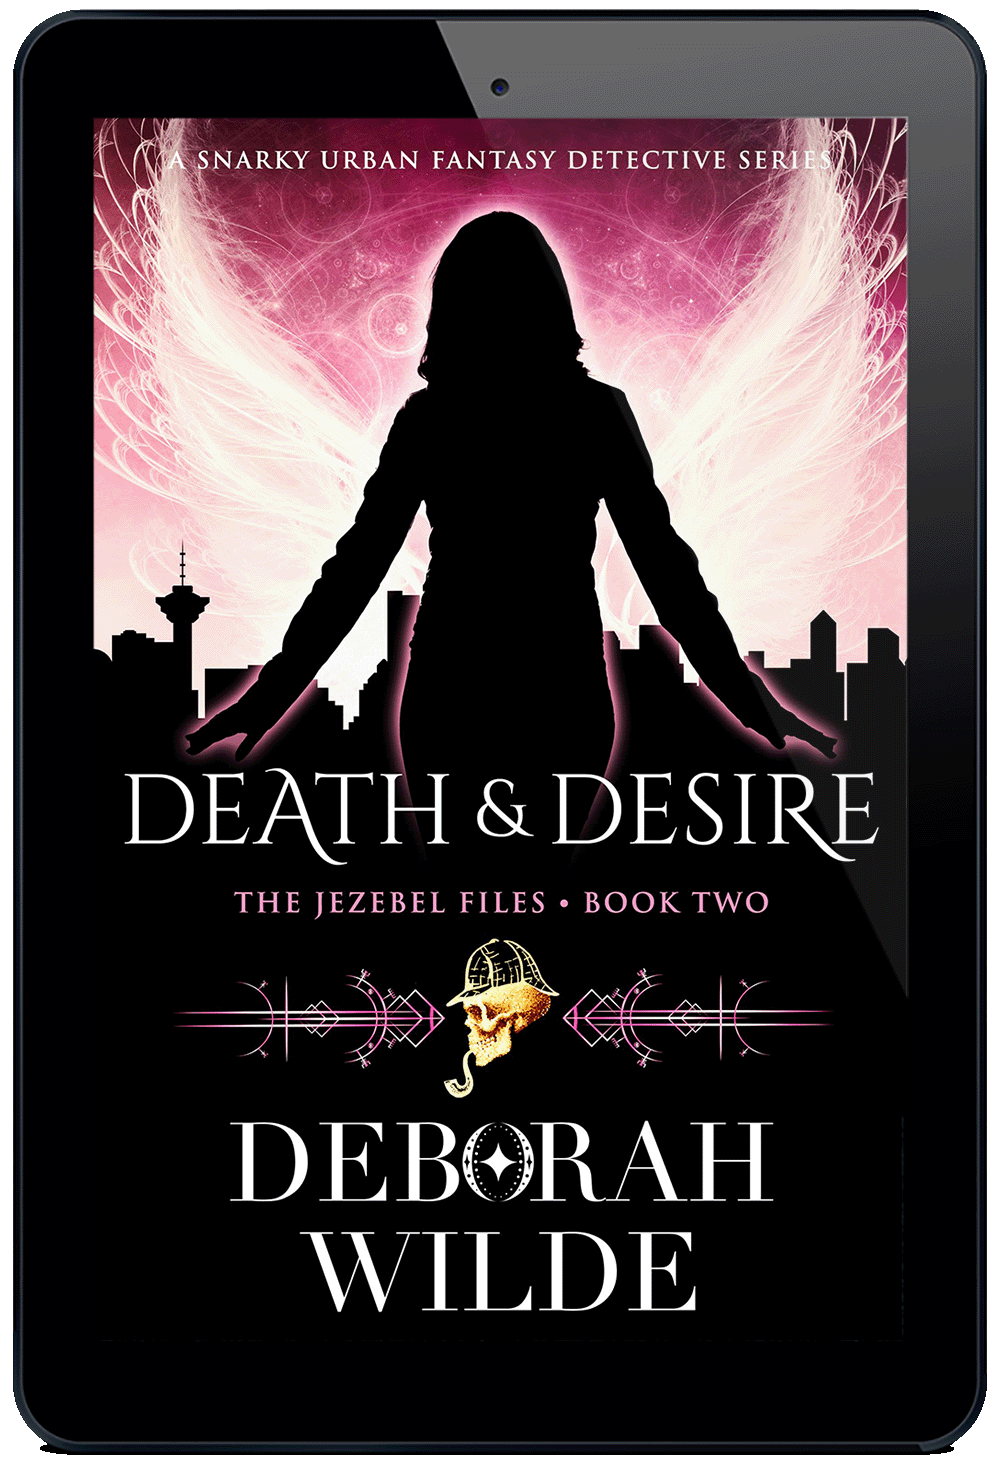 Death & Desire: Jezebel Files #2. A snarky urban fantasy detective series by Deborah Wilde